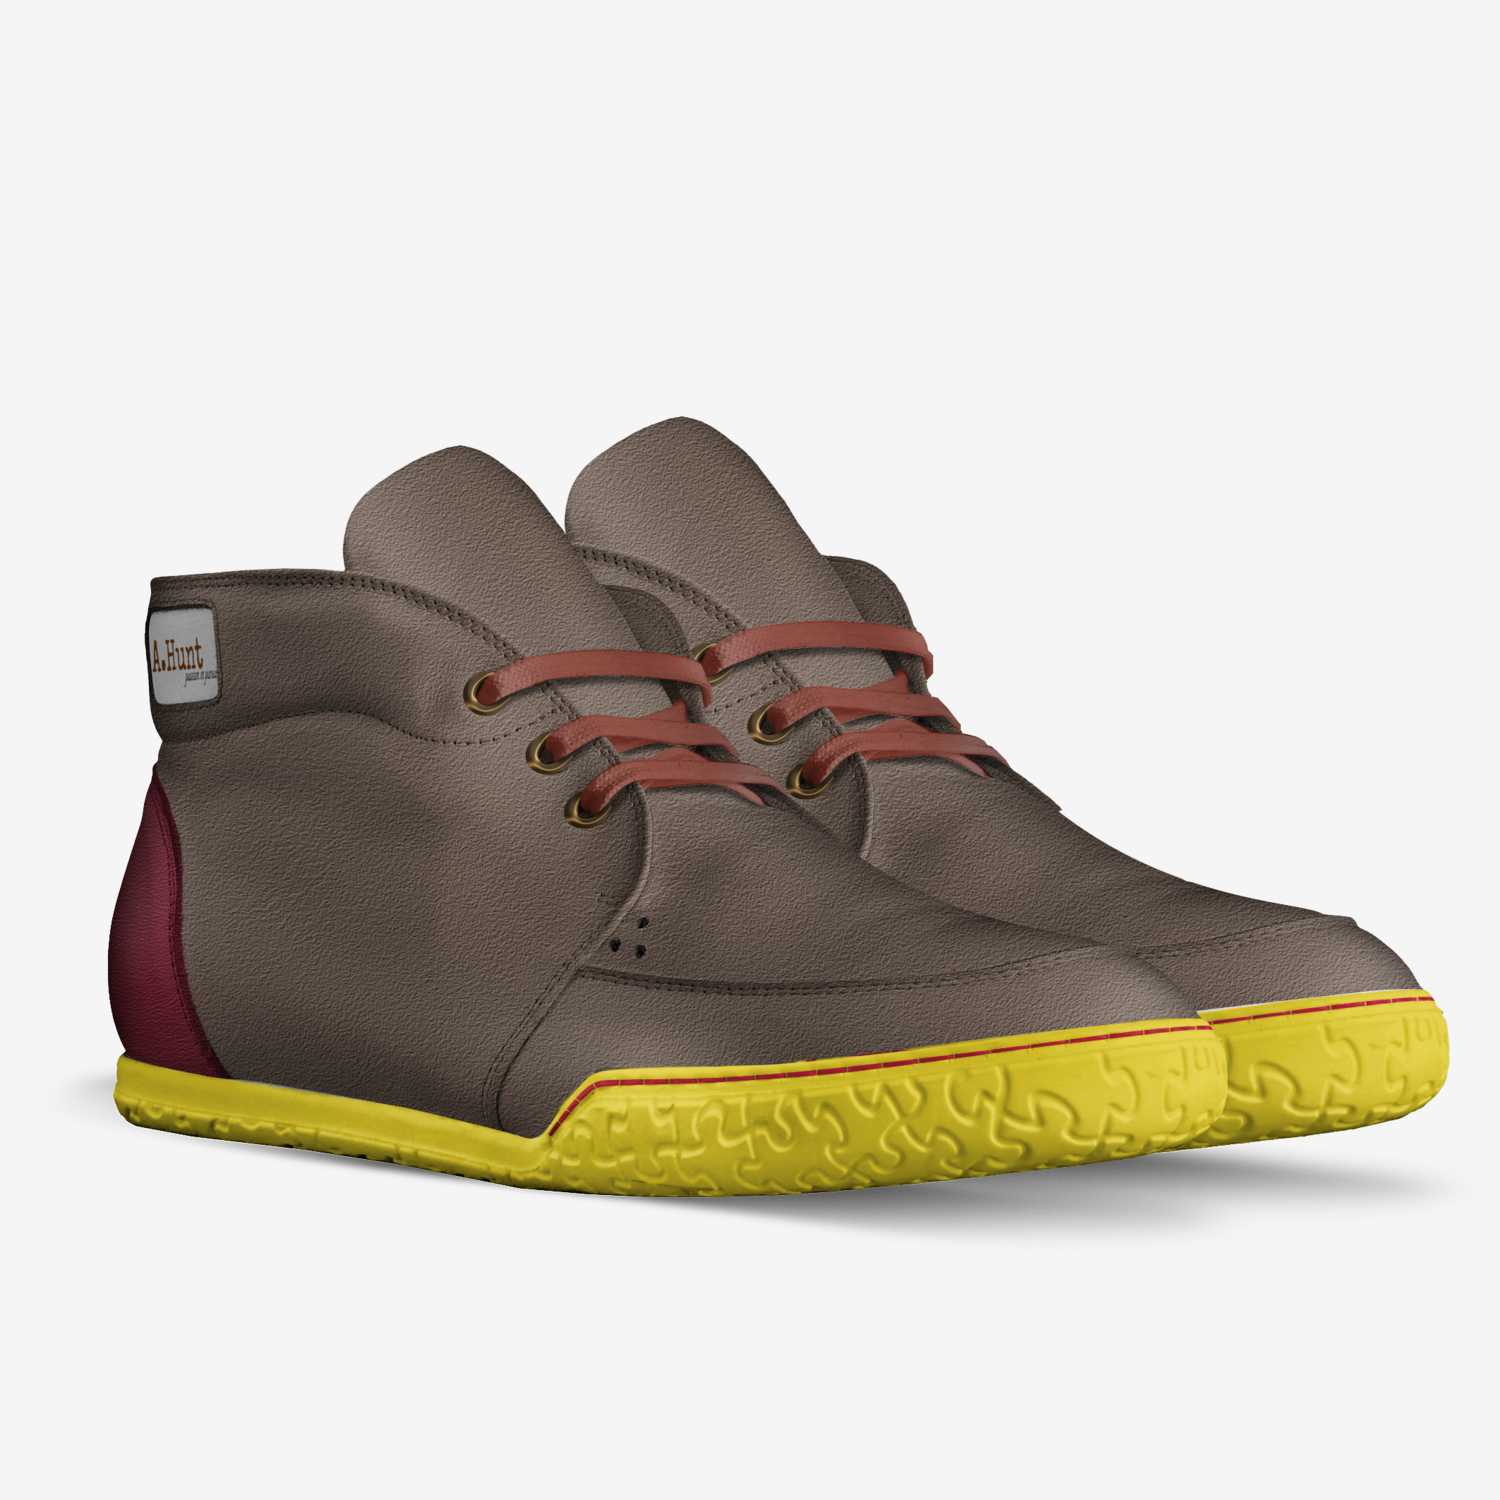 A.Hunt | A Custom Shoe concept by Myran Hunter